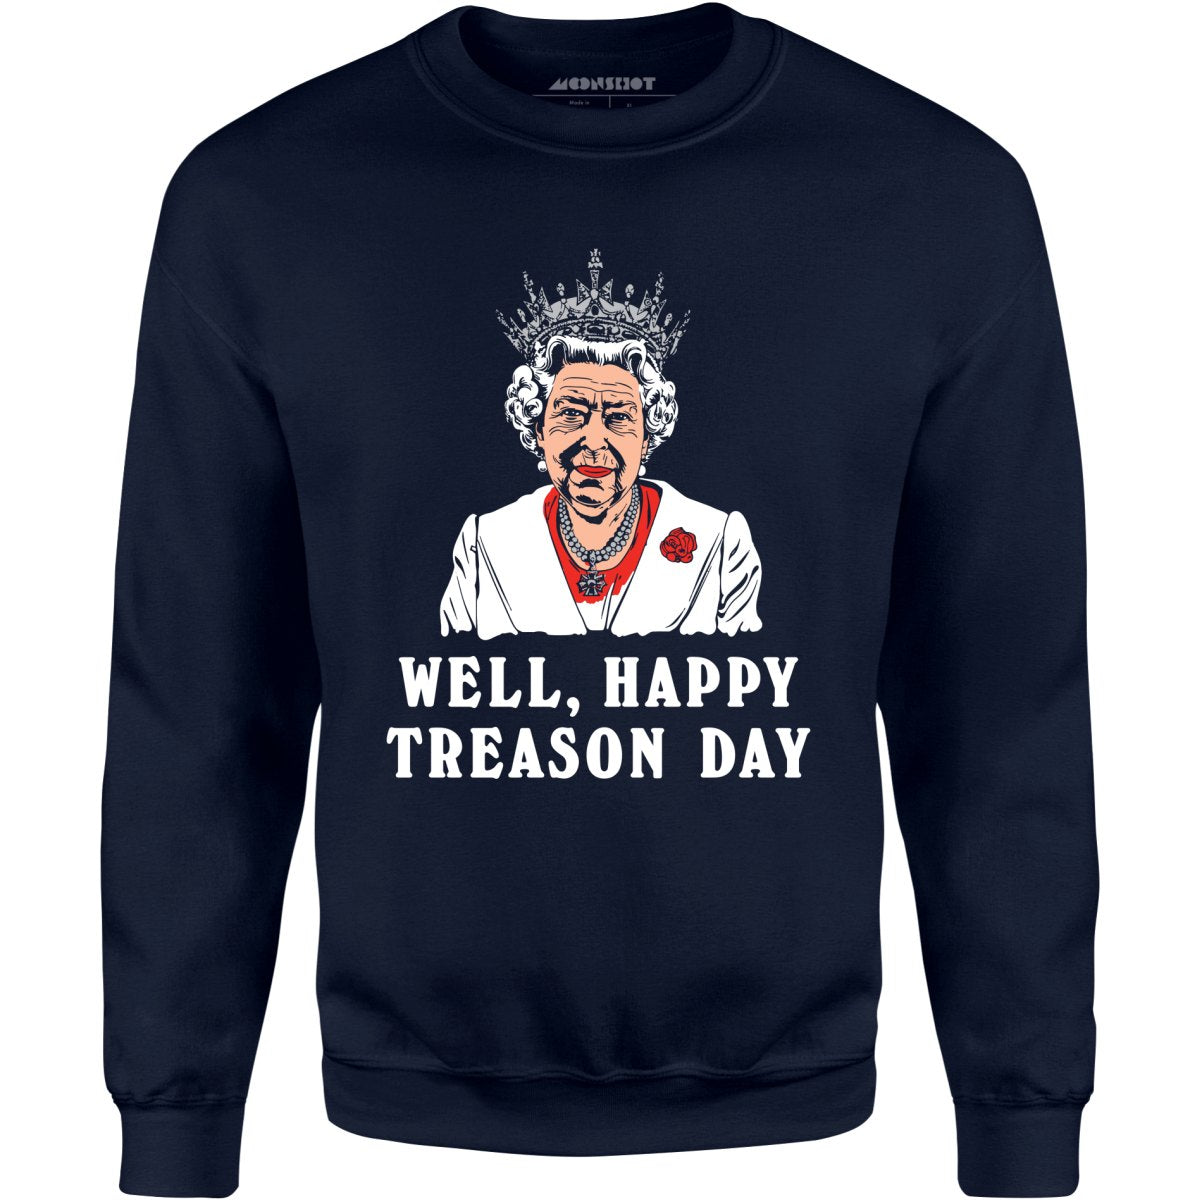 Well, Happy Treason Day - Unisex Sweatshirt